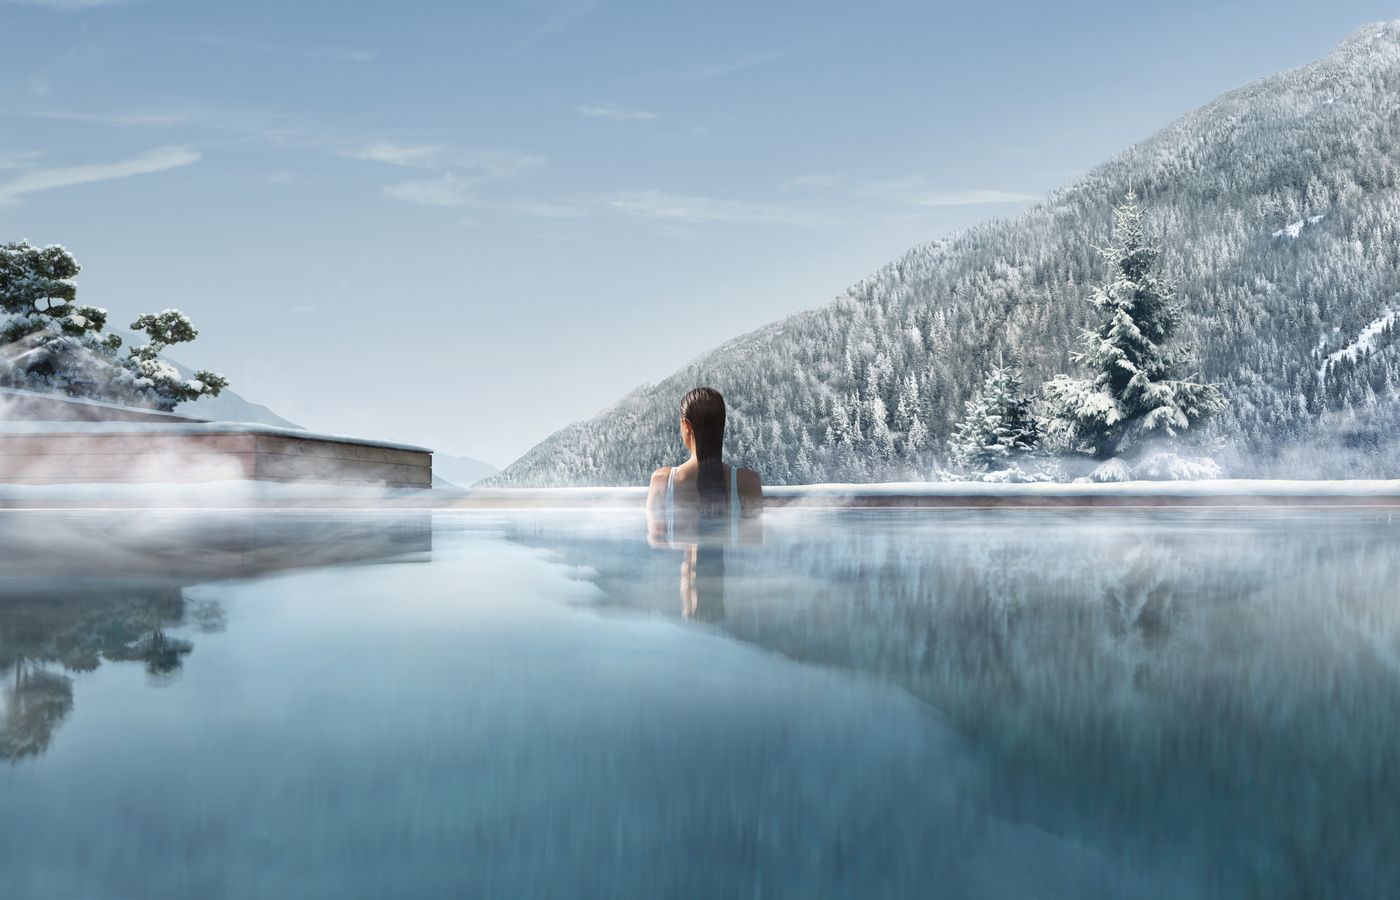 Trip Serbien - FitReisen - Lefay Resort & Spa Dolomiti in Pinzolo buche jetzt Deinen Wellness & Beauty Urlaub im Lefay Resort & Spa Dolomiti in der Region Südtirol, in Italien günstig bei uns!